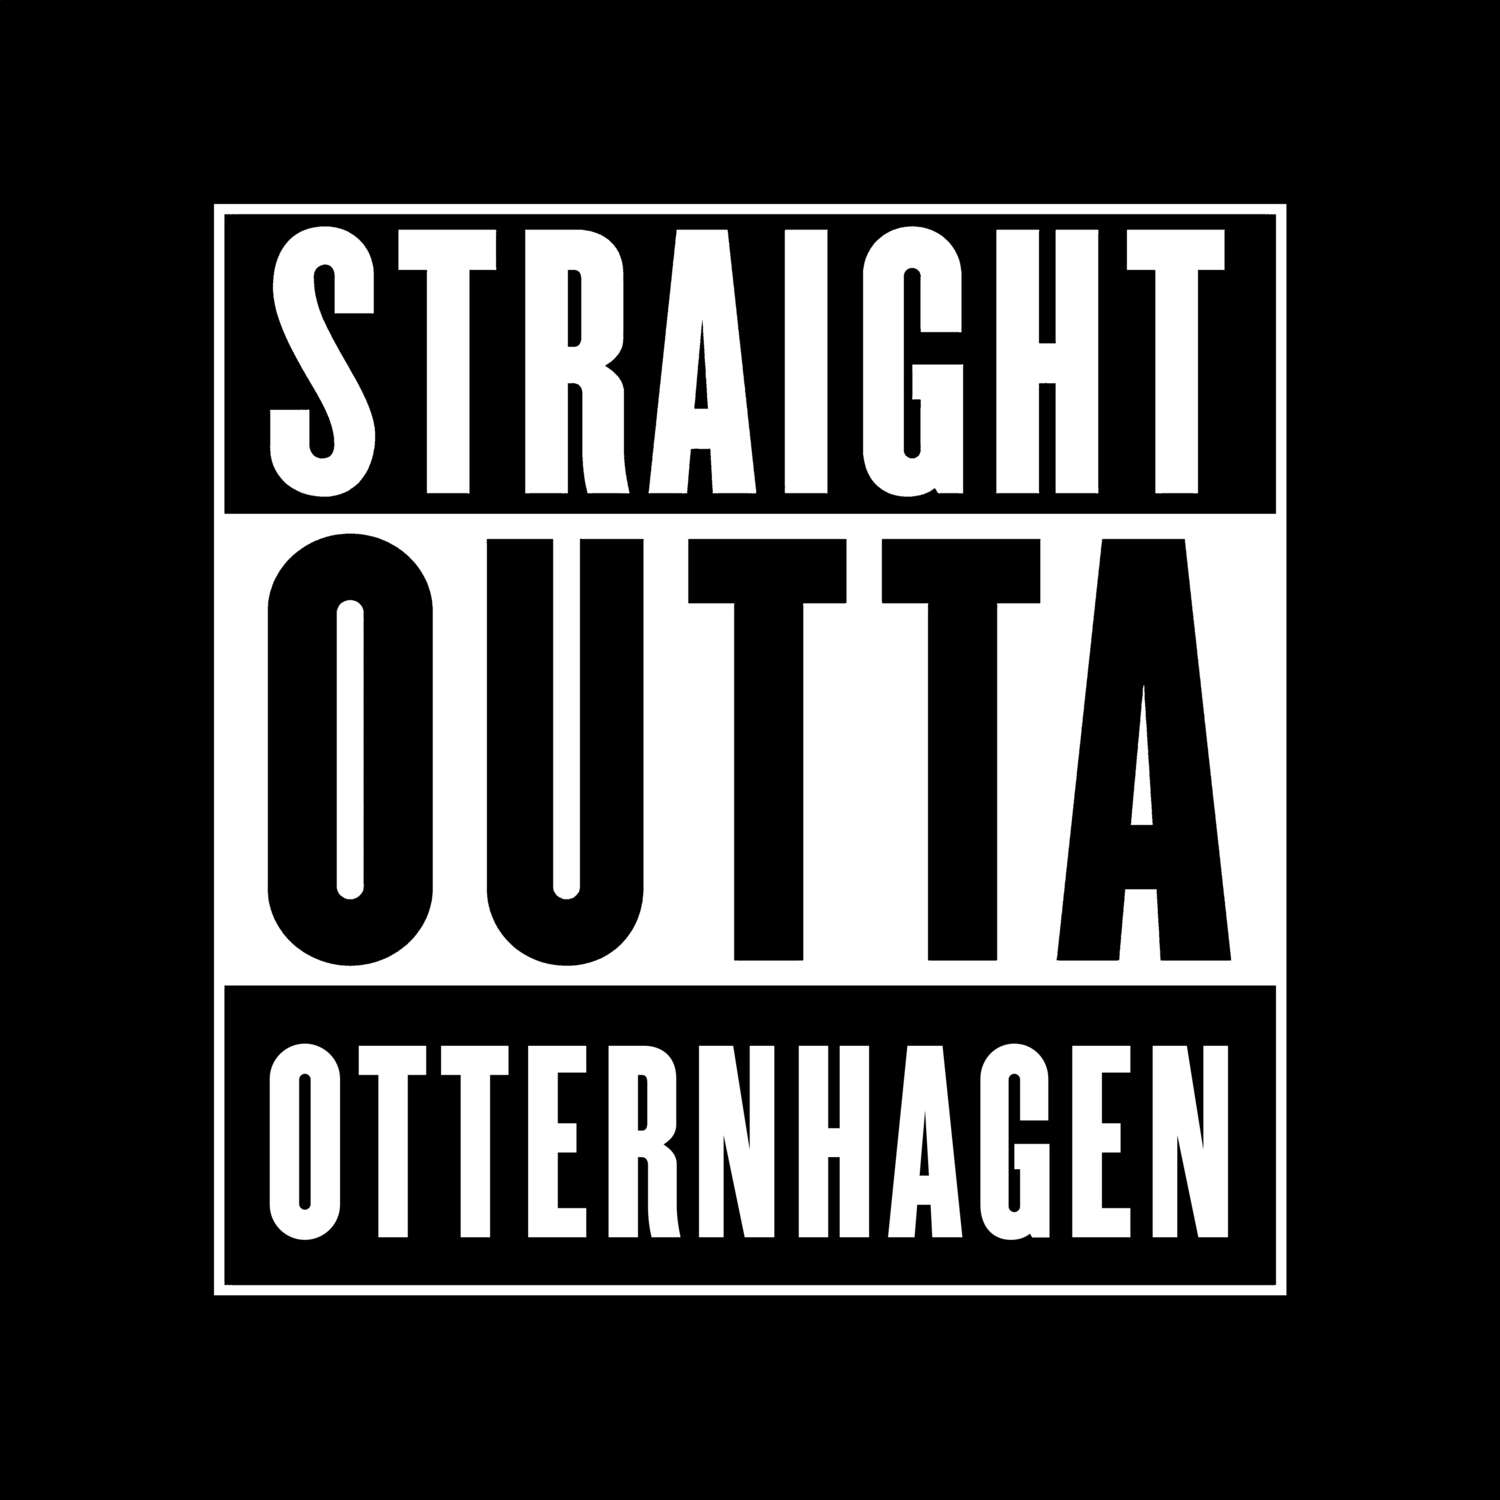 Otternhagen T-Shirt »Straight Outta«